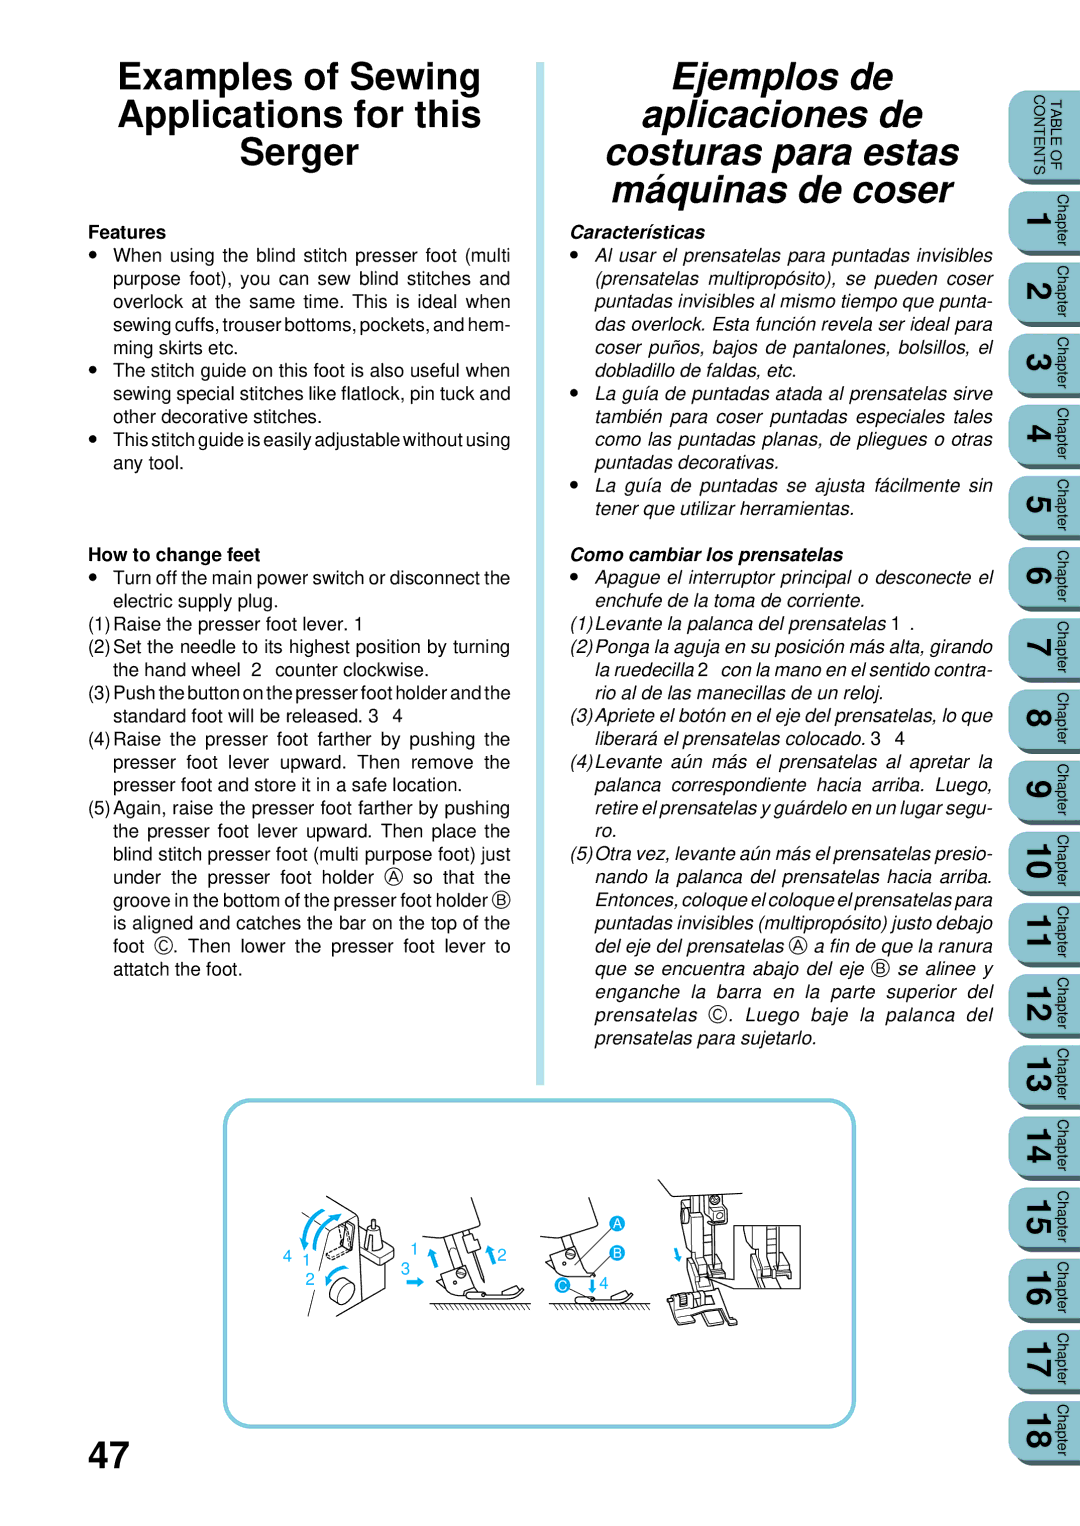 Brother UM 103D manual Features, How to change feet, Características, Como cambiar los prensatelas 